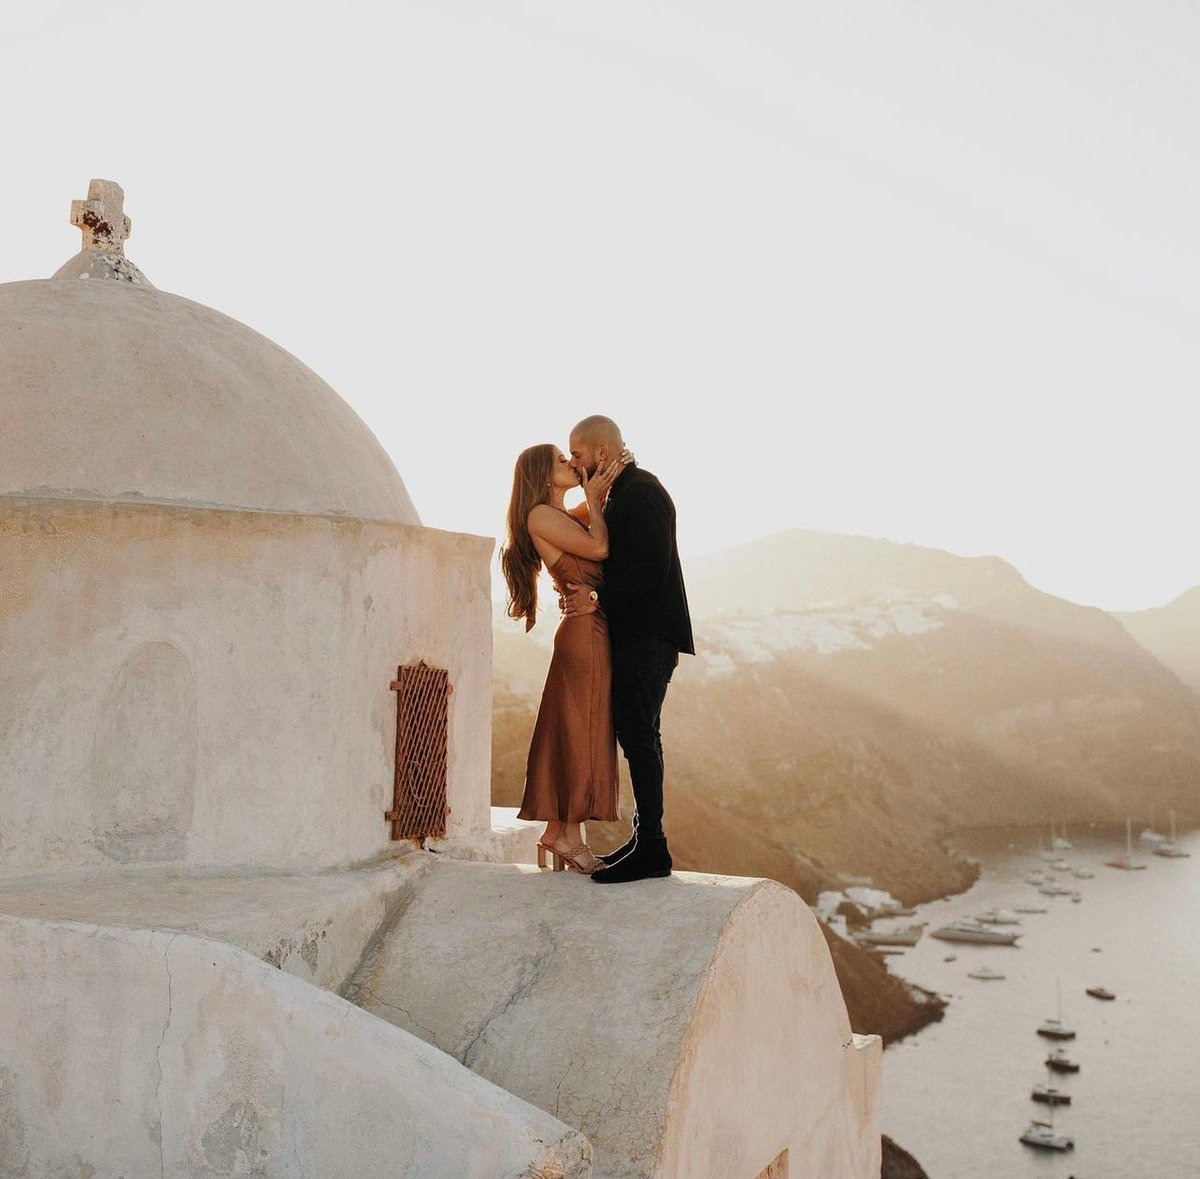 Another stunning Santorini love story - taken the day before their wedding. 🤍

Photo: @jordanvoth
Couple: @albernaz45 @_frommelissa

#greekwedding #wedding #destinationwedding #weddingideas #bridetobe #weddingphotographer #santoriniwedding #weddinginspo #bajanwed